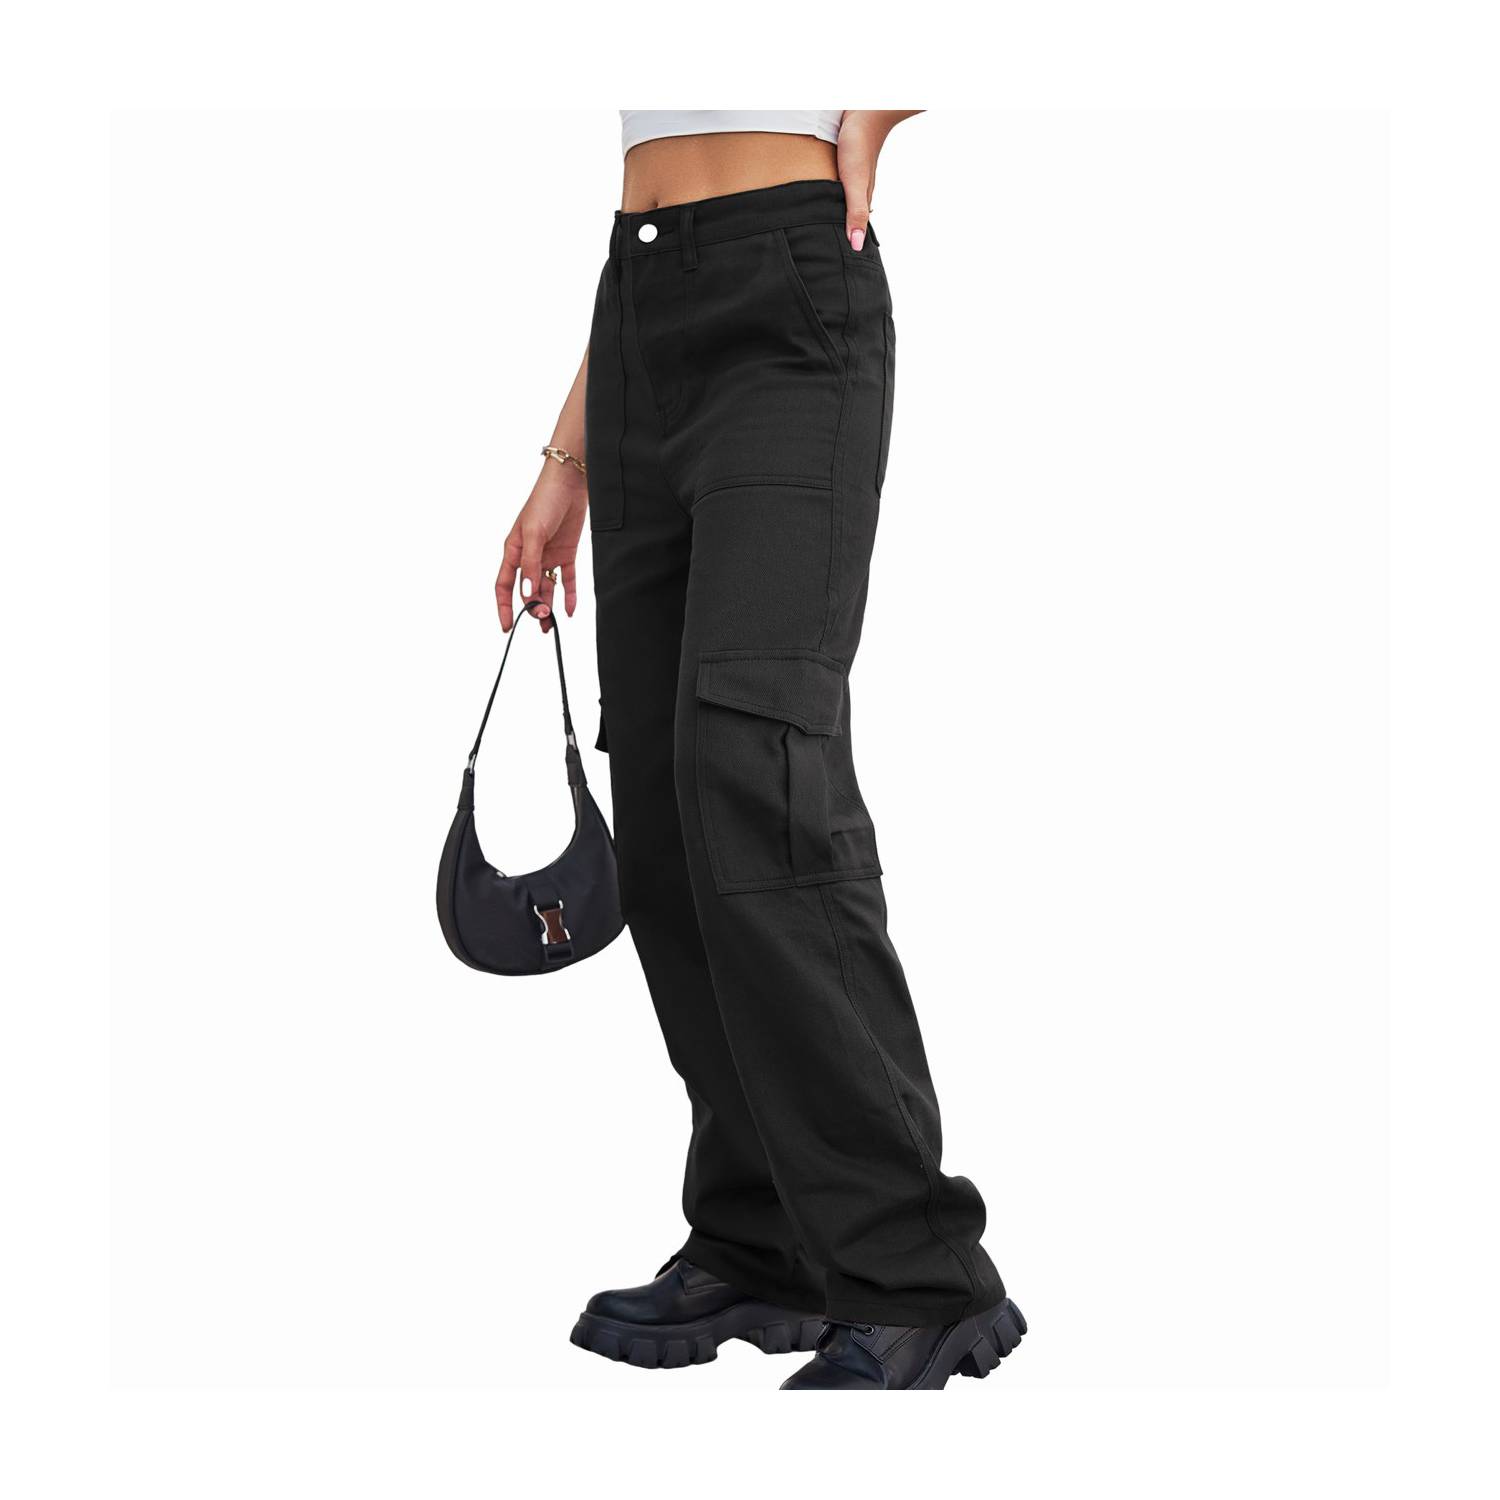 Pantalones cargo elásticos de cintura alta para mujer - Khaki